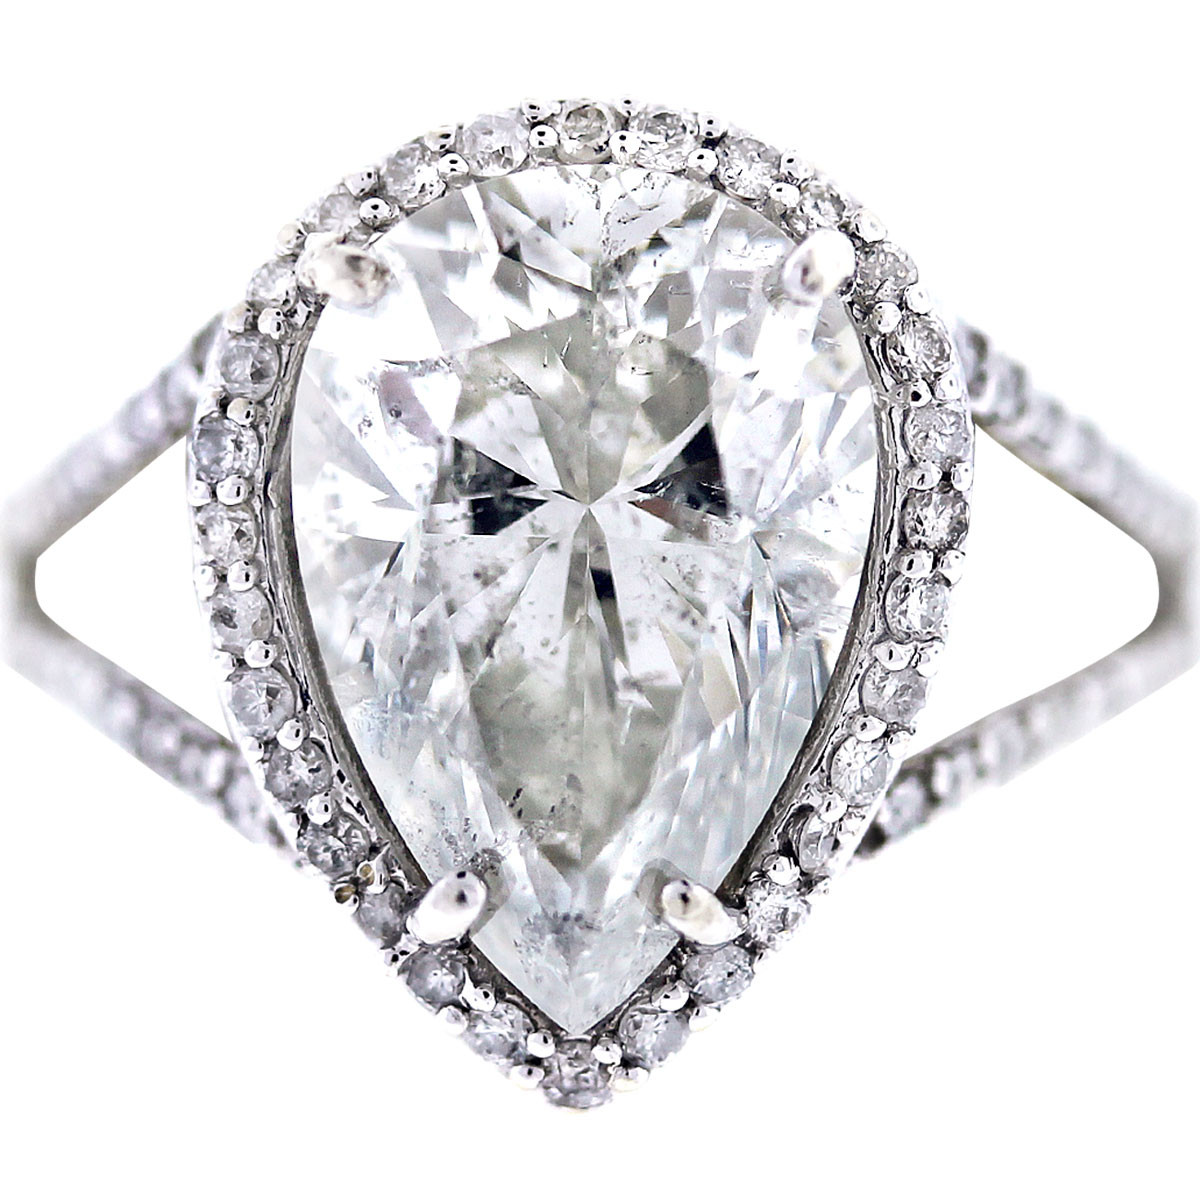 Pear Shaped Diamond Engagement Rings
 White Gold Pear Shaped Diamond Halo Style Pave Engagement Ring